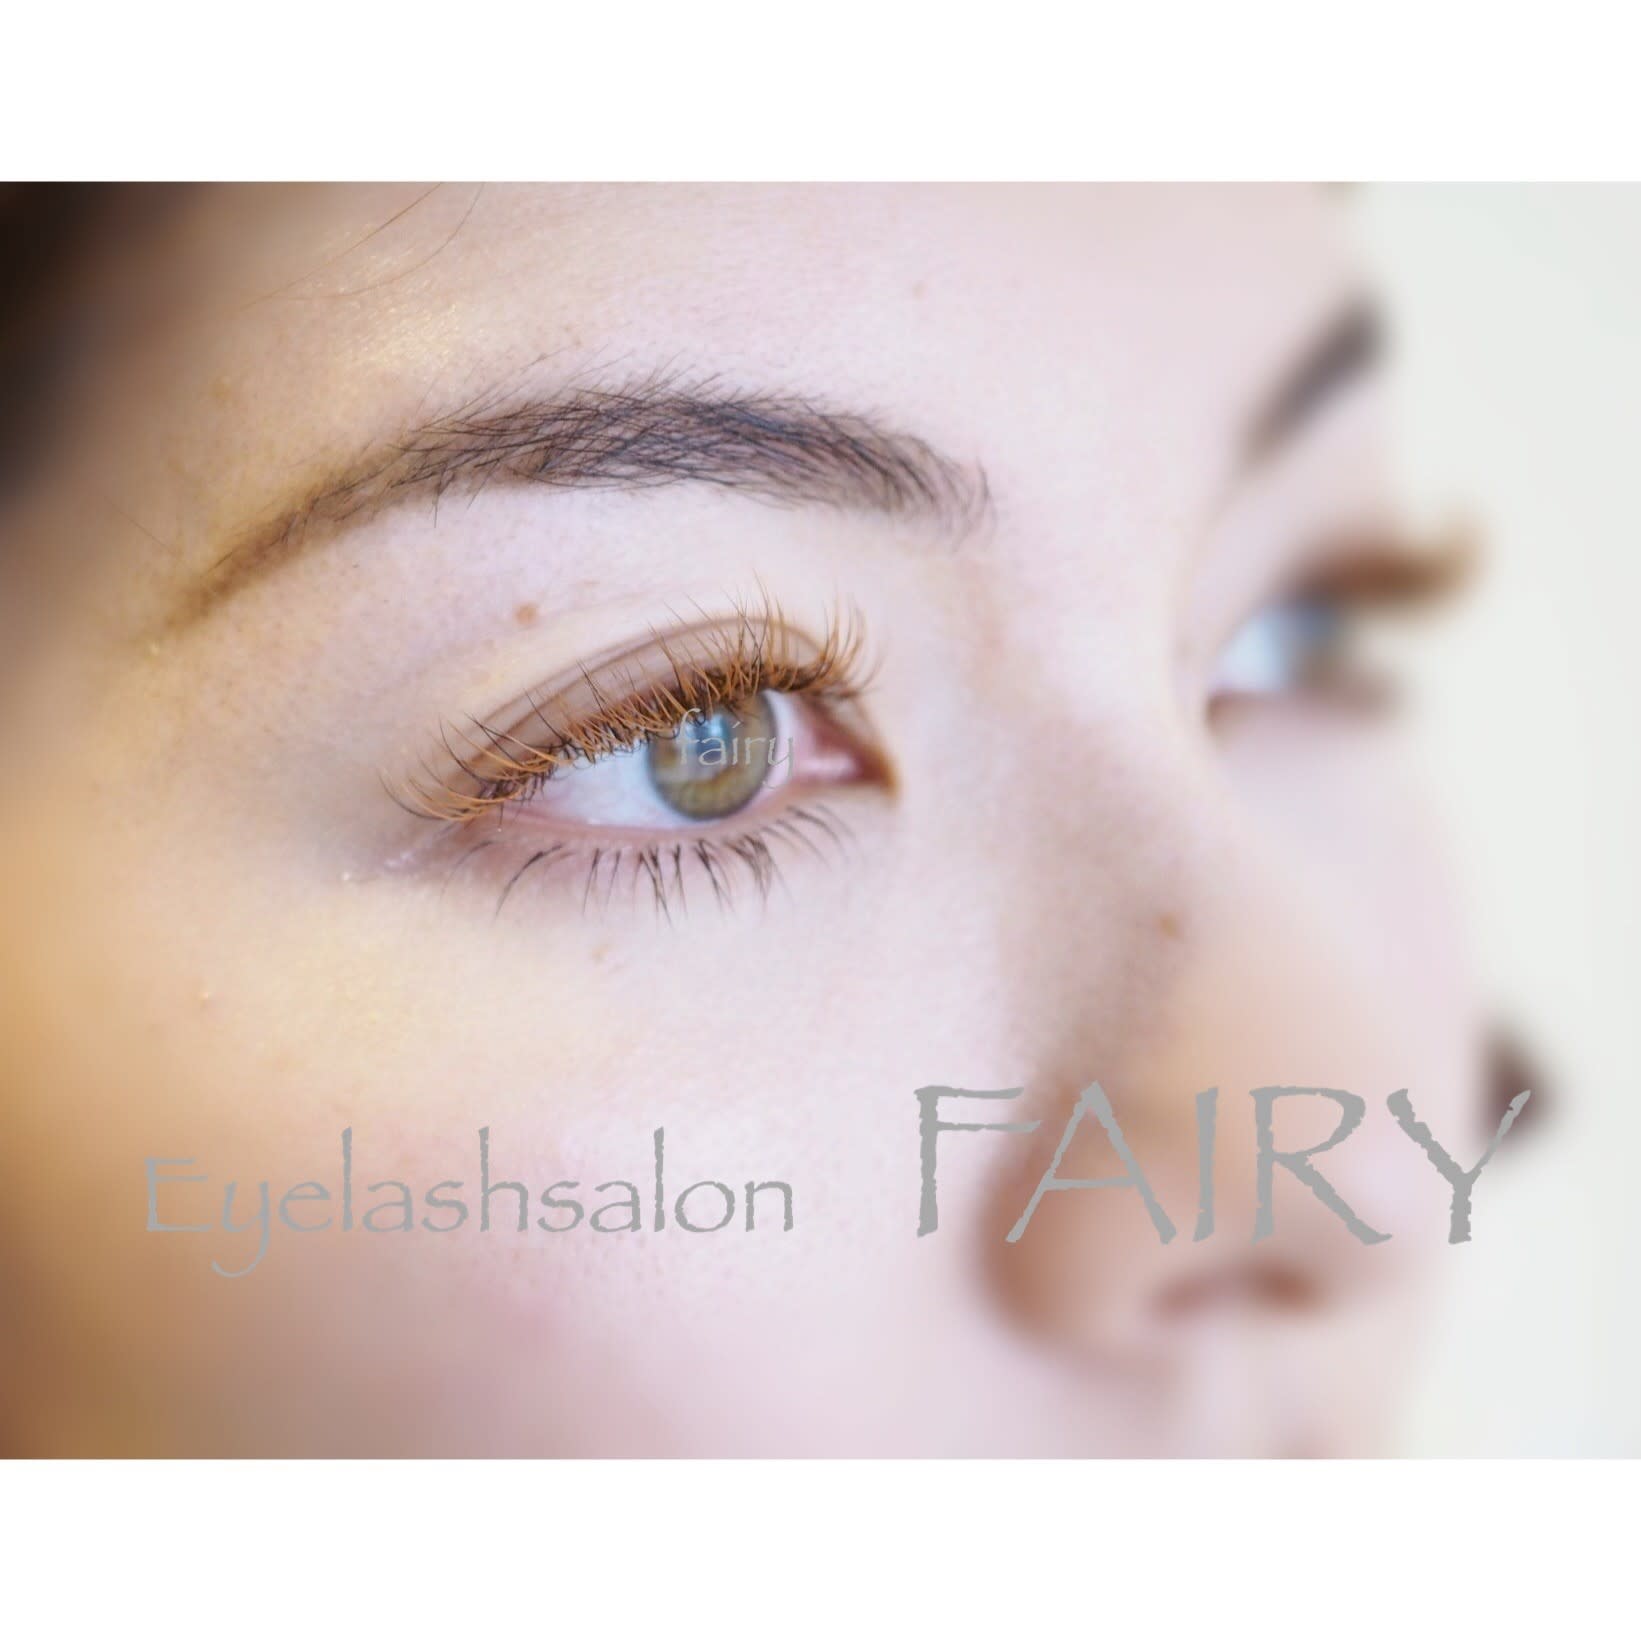 Eyelashsalon FAIRYのアイキャッチ画像